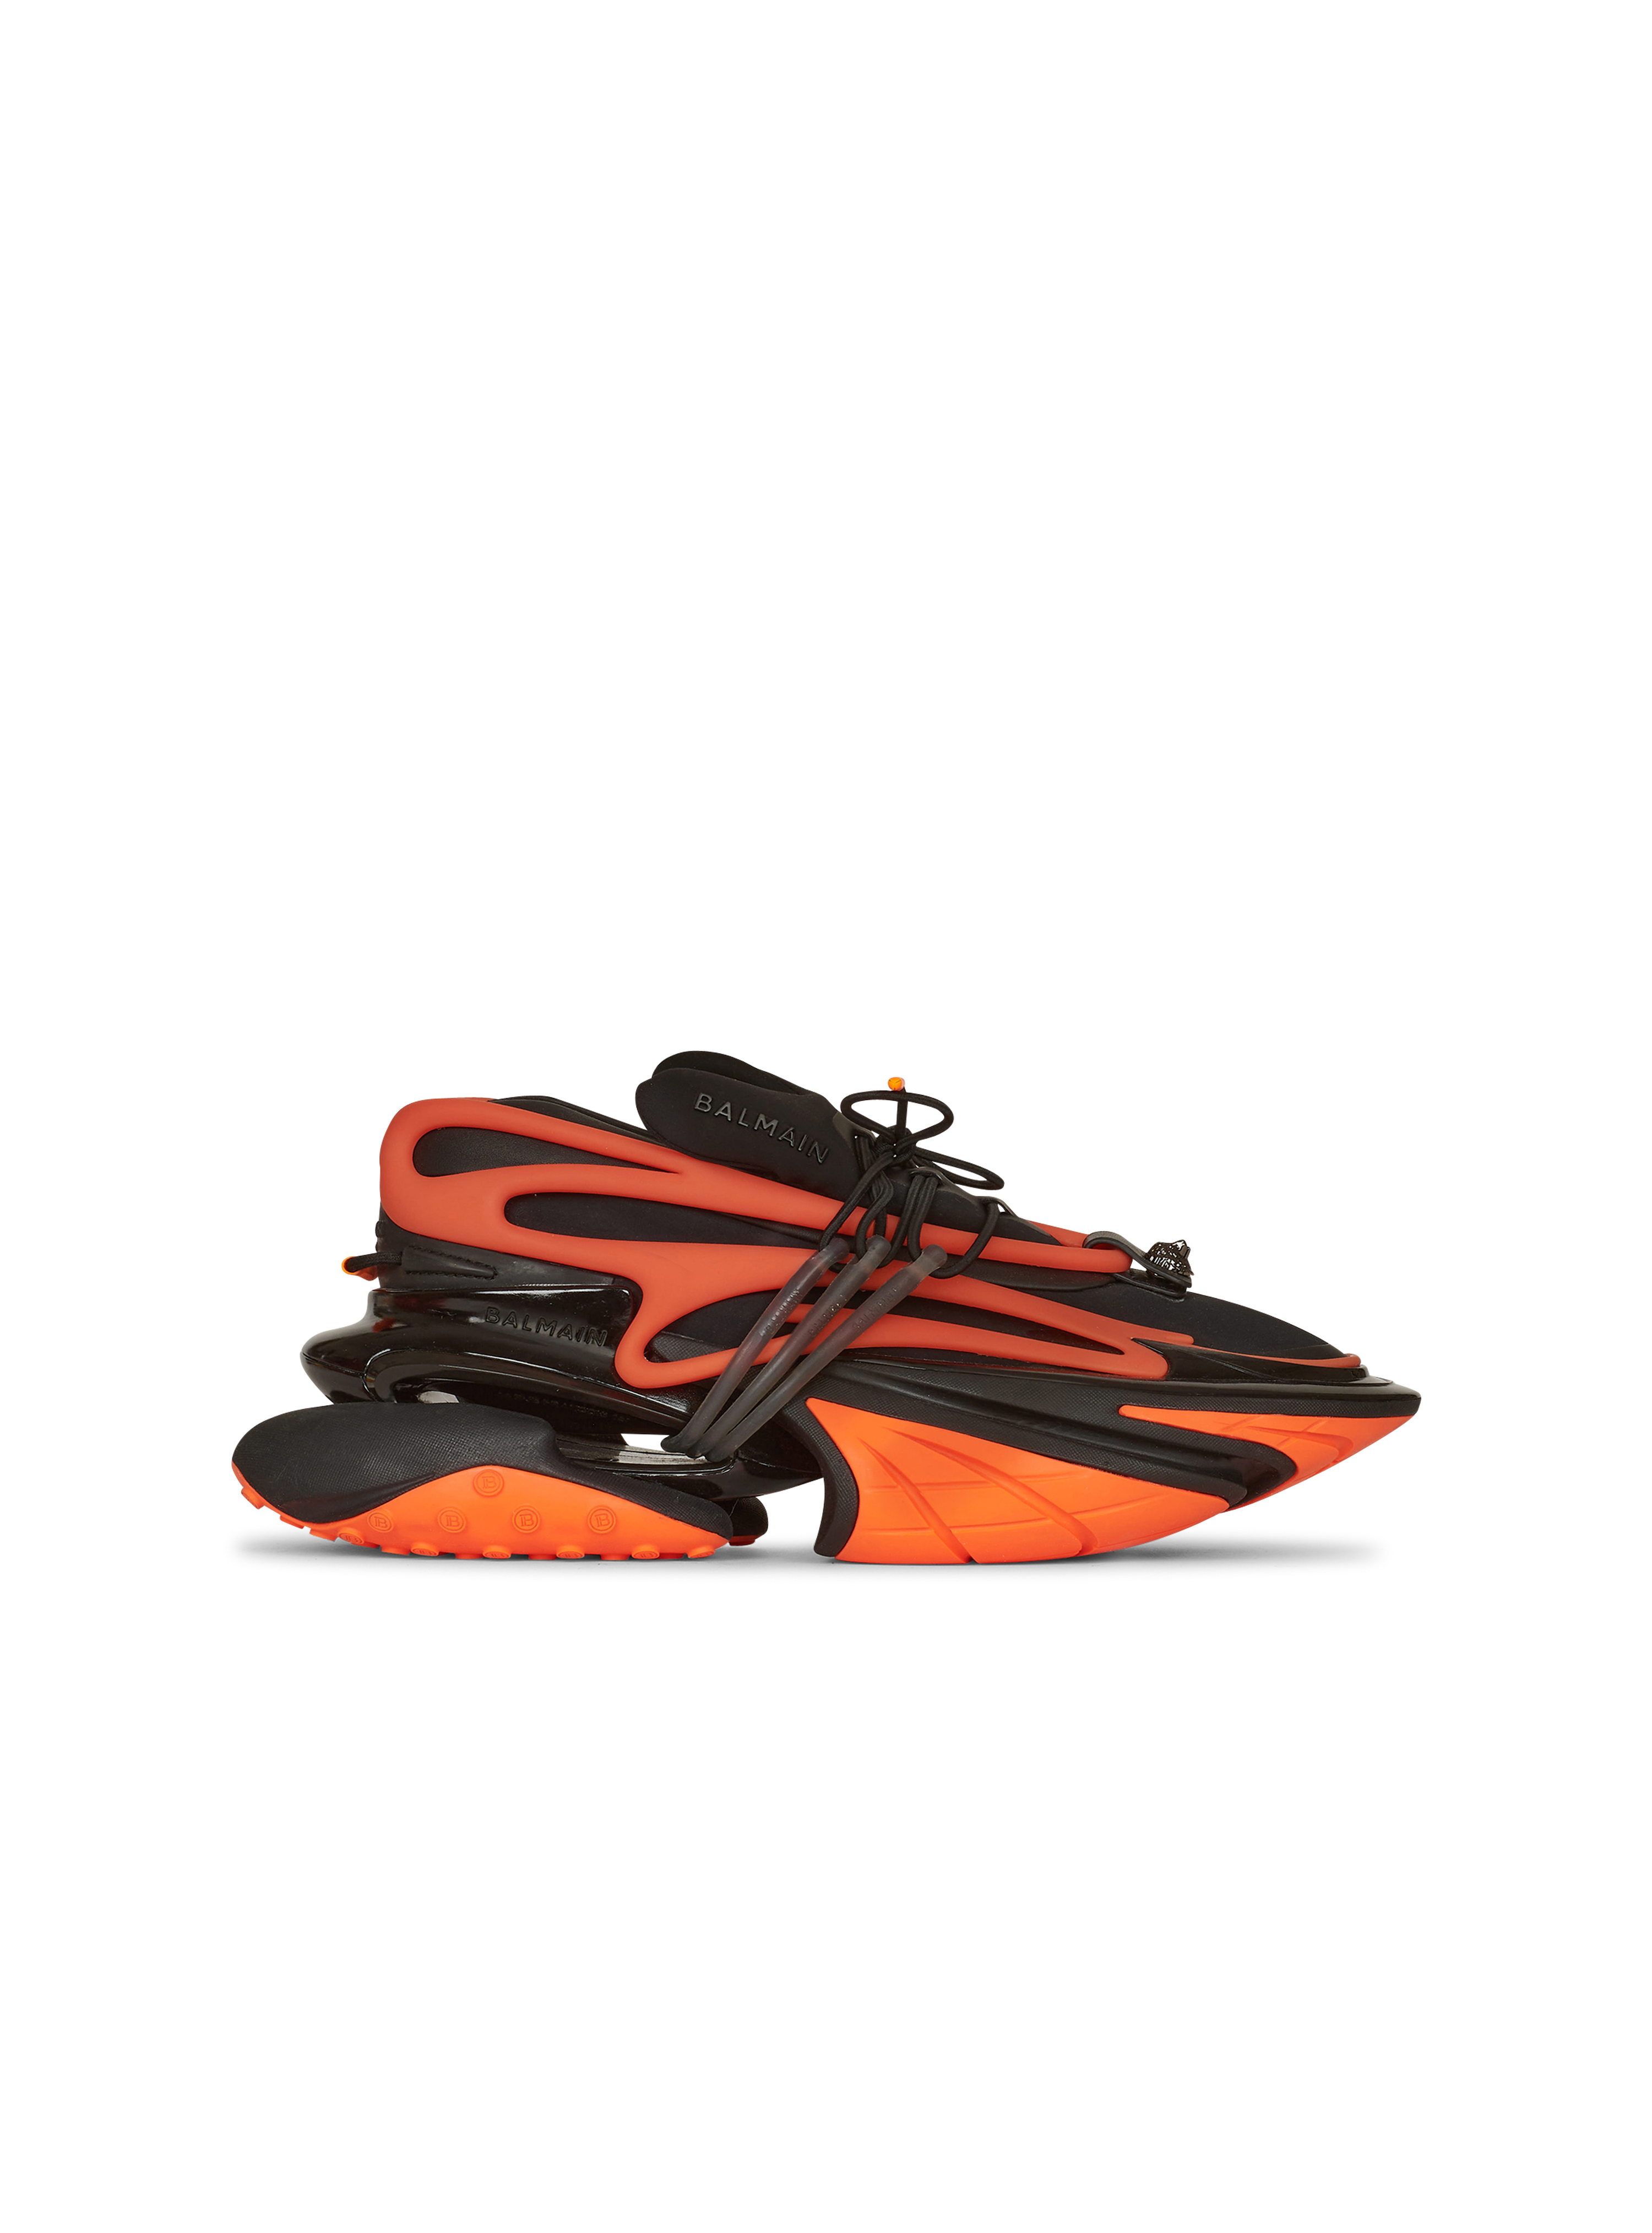 Unicorn Low-Top-Sneakers aus Neopren und Leder, orange